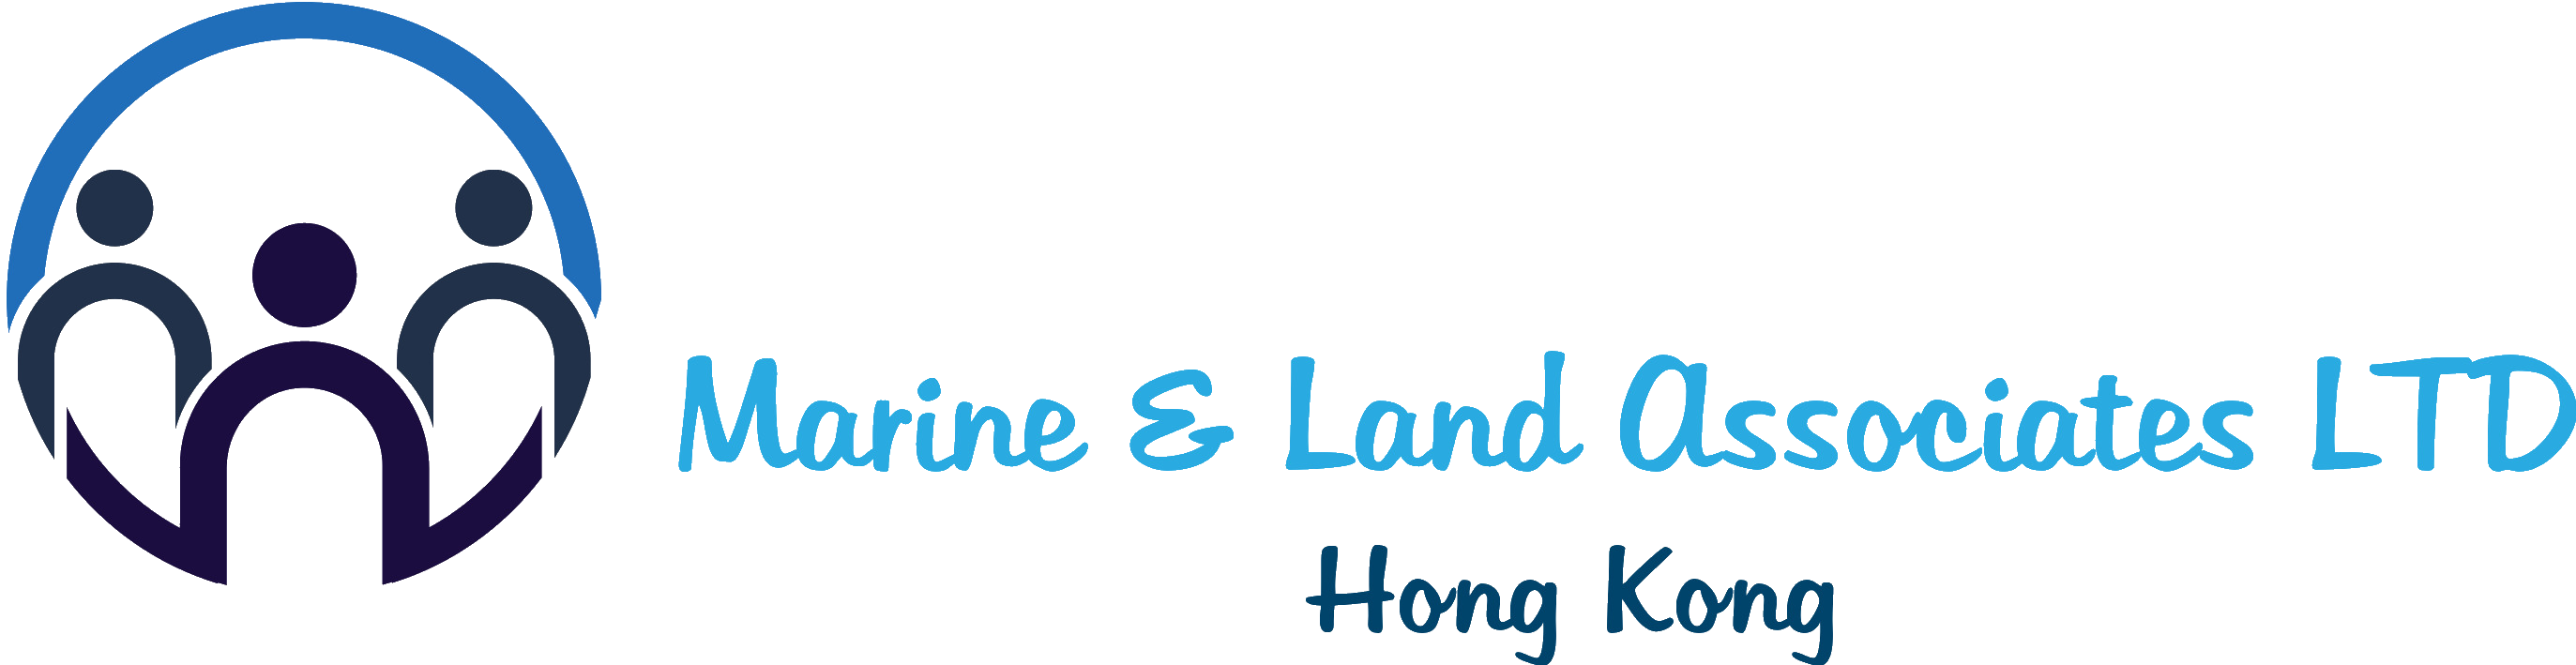 Marine & Land Associates Limited, Hong Kong